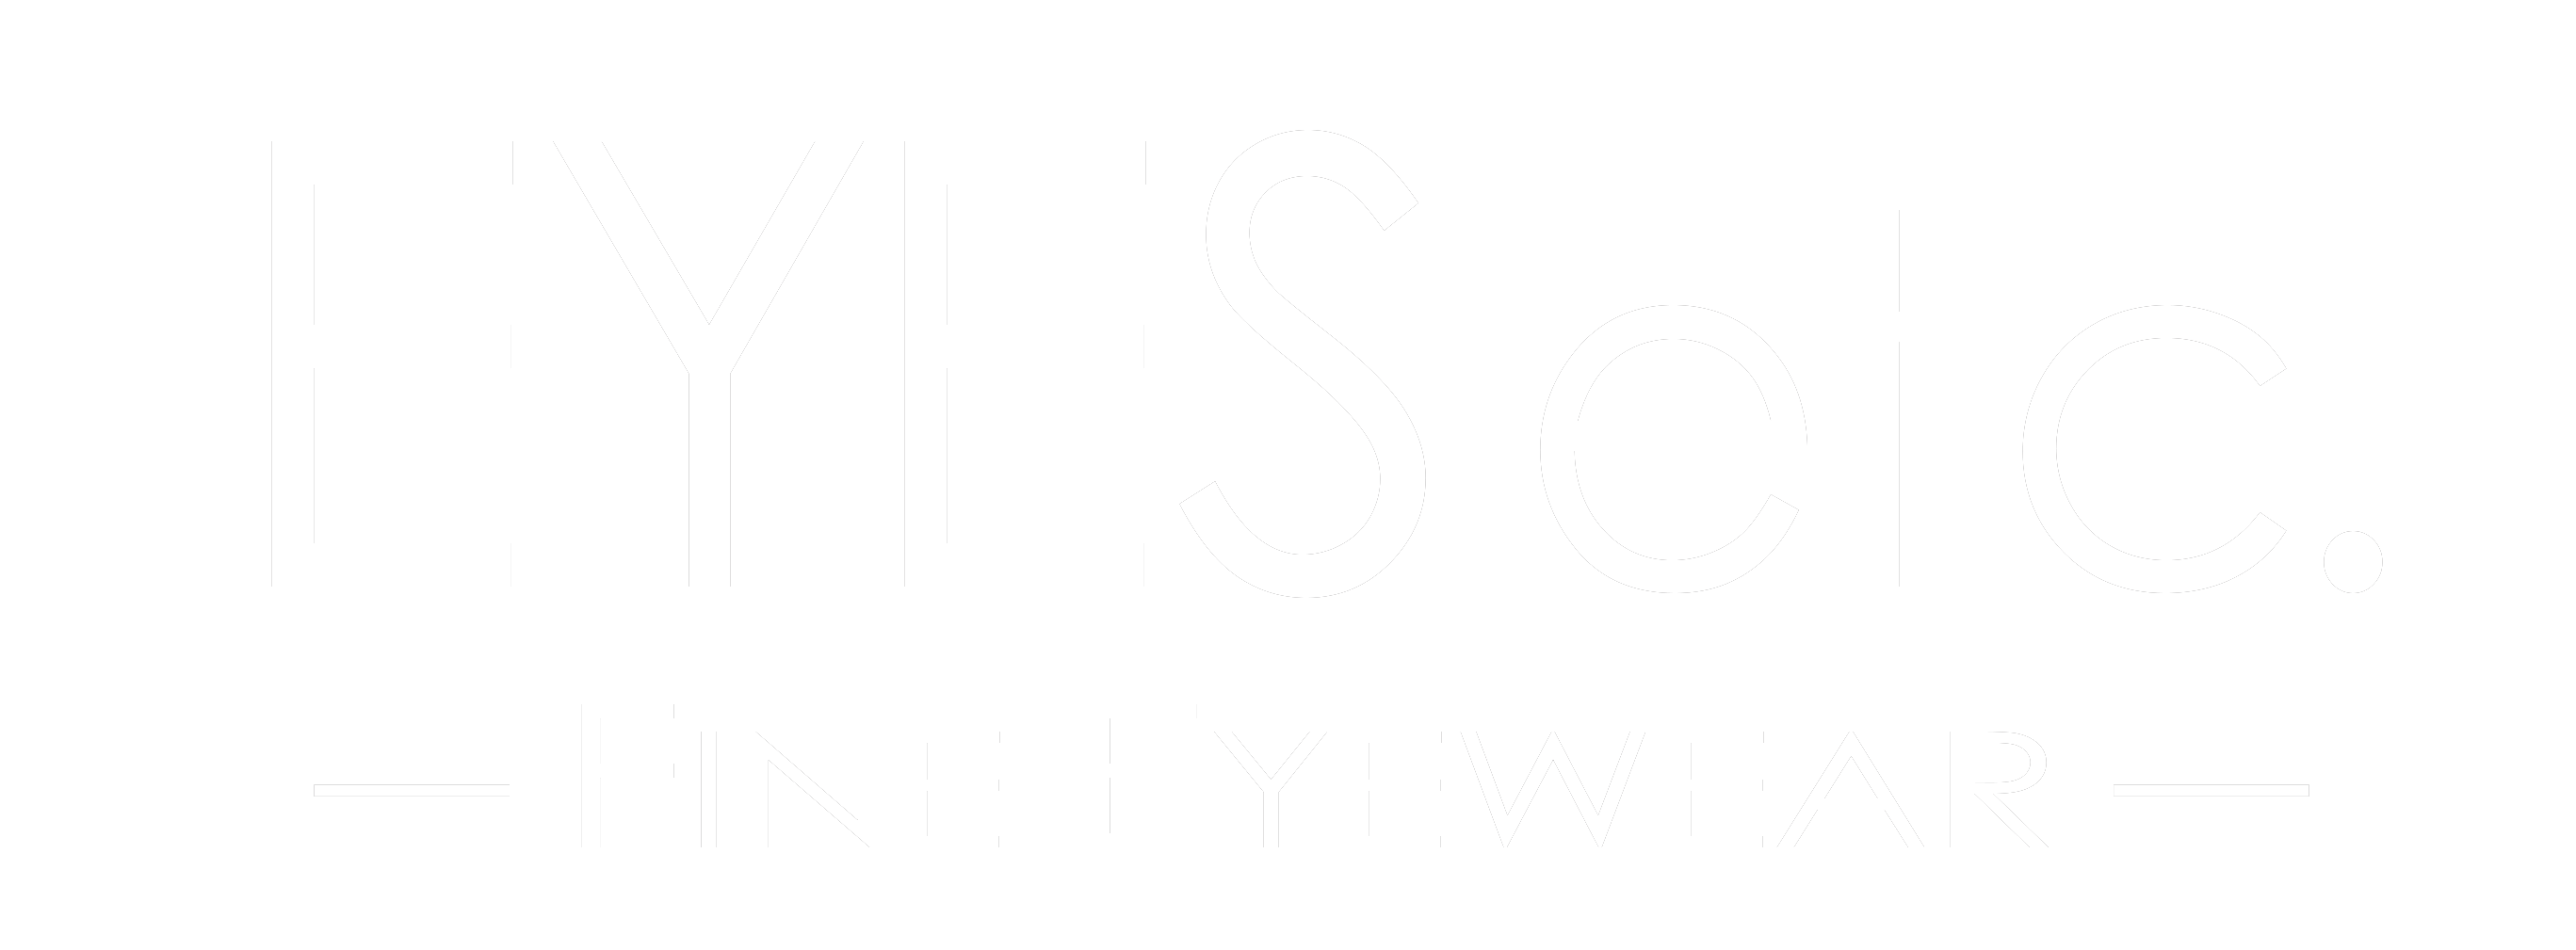 Eyes ETC